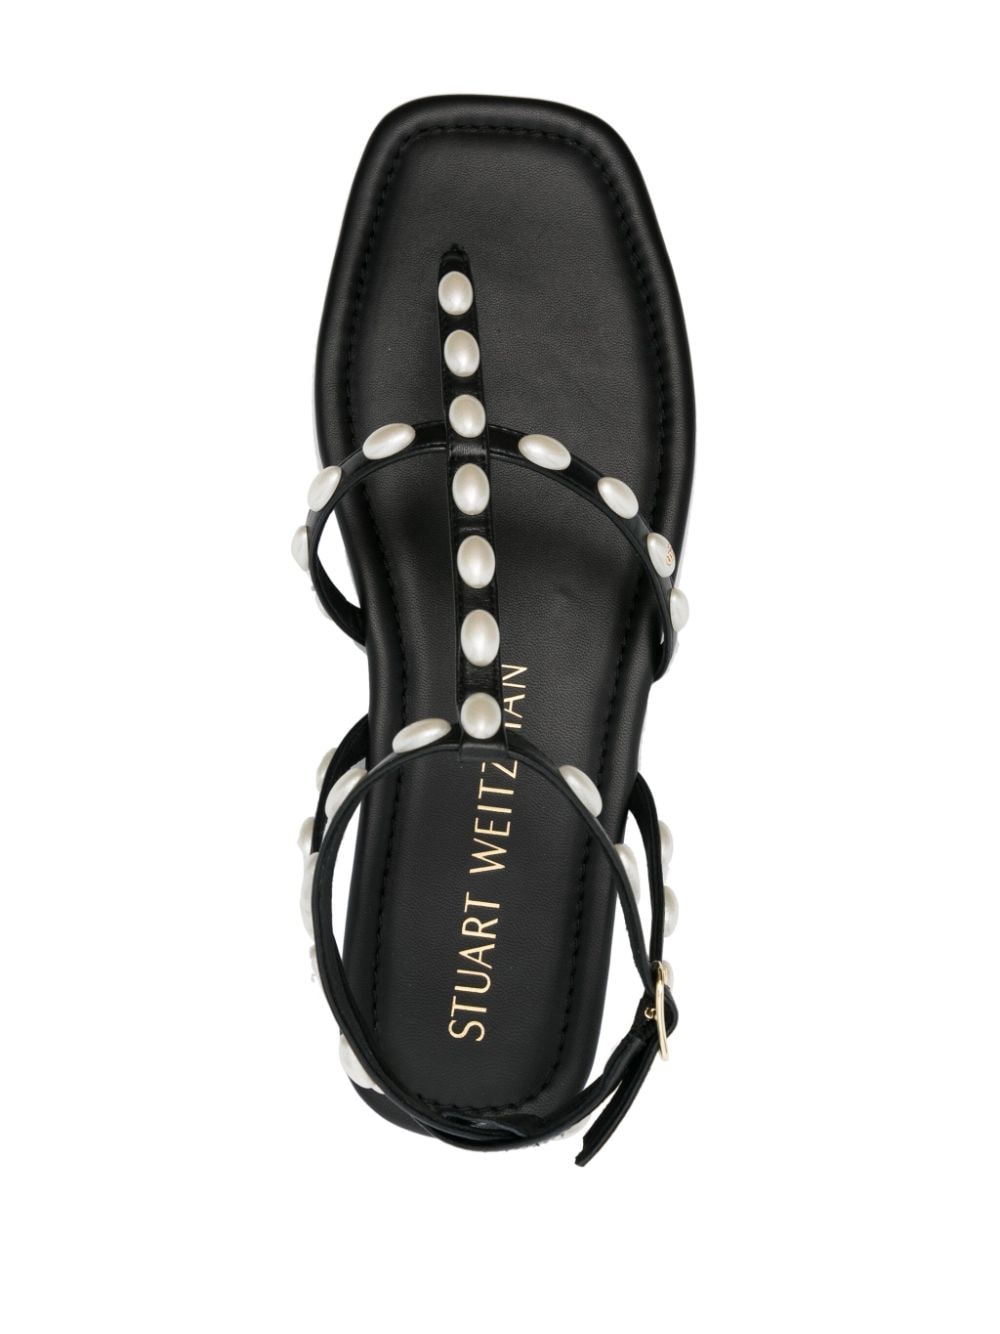 Pearlita leather flat sandals<BR/><BR/><BR/>